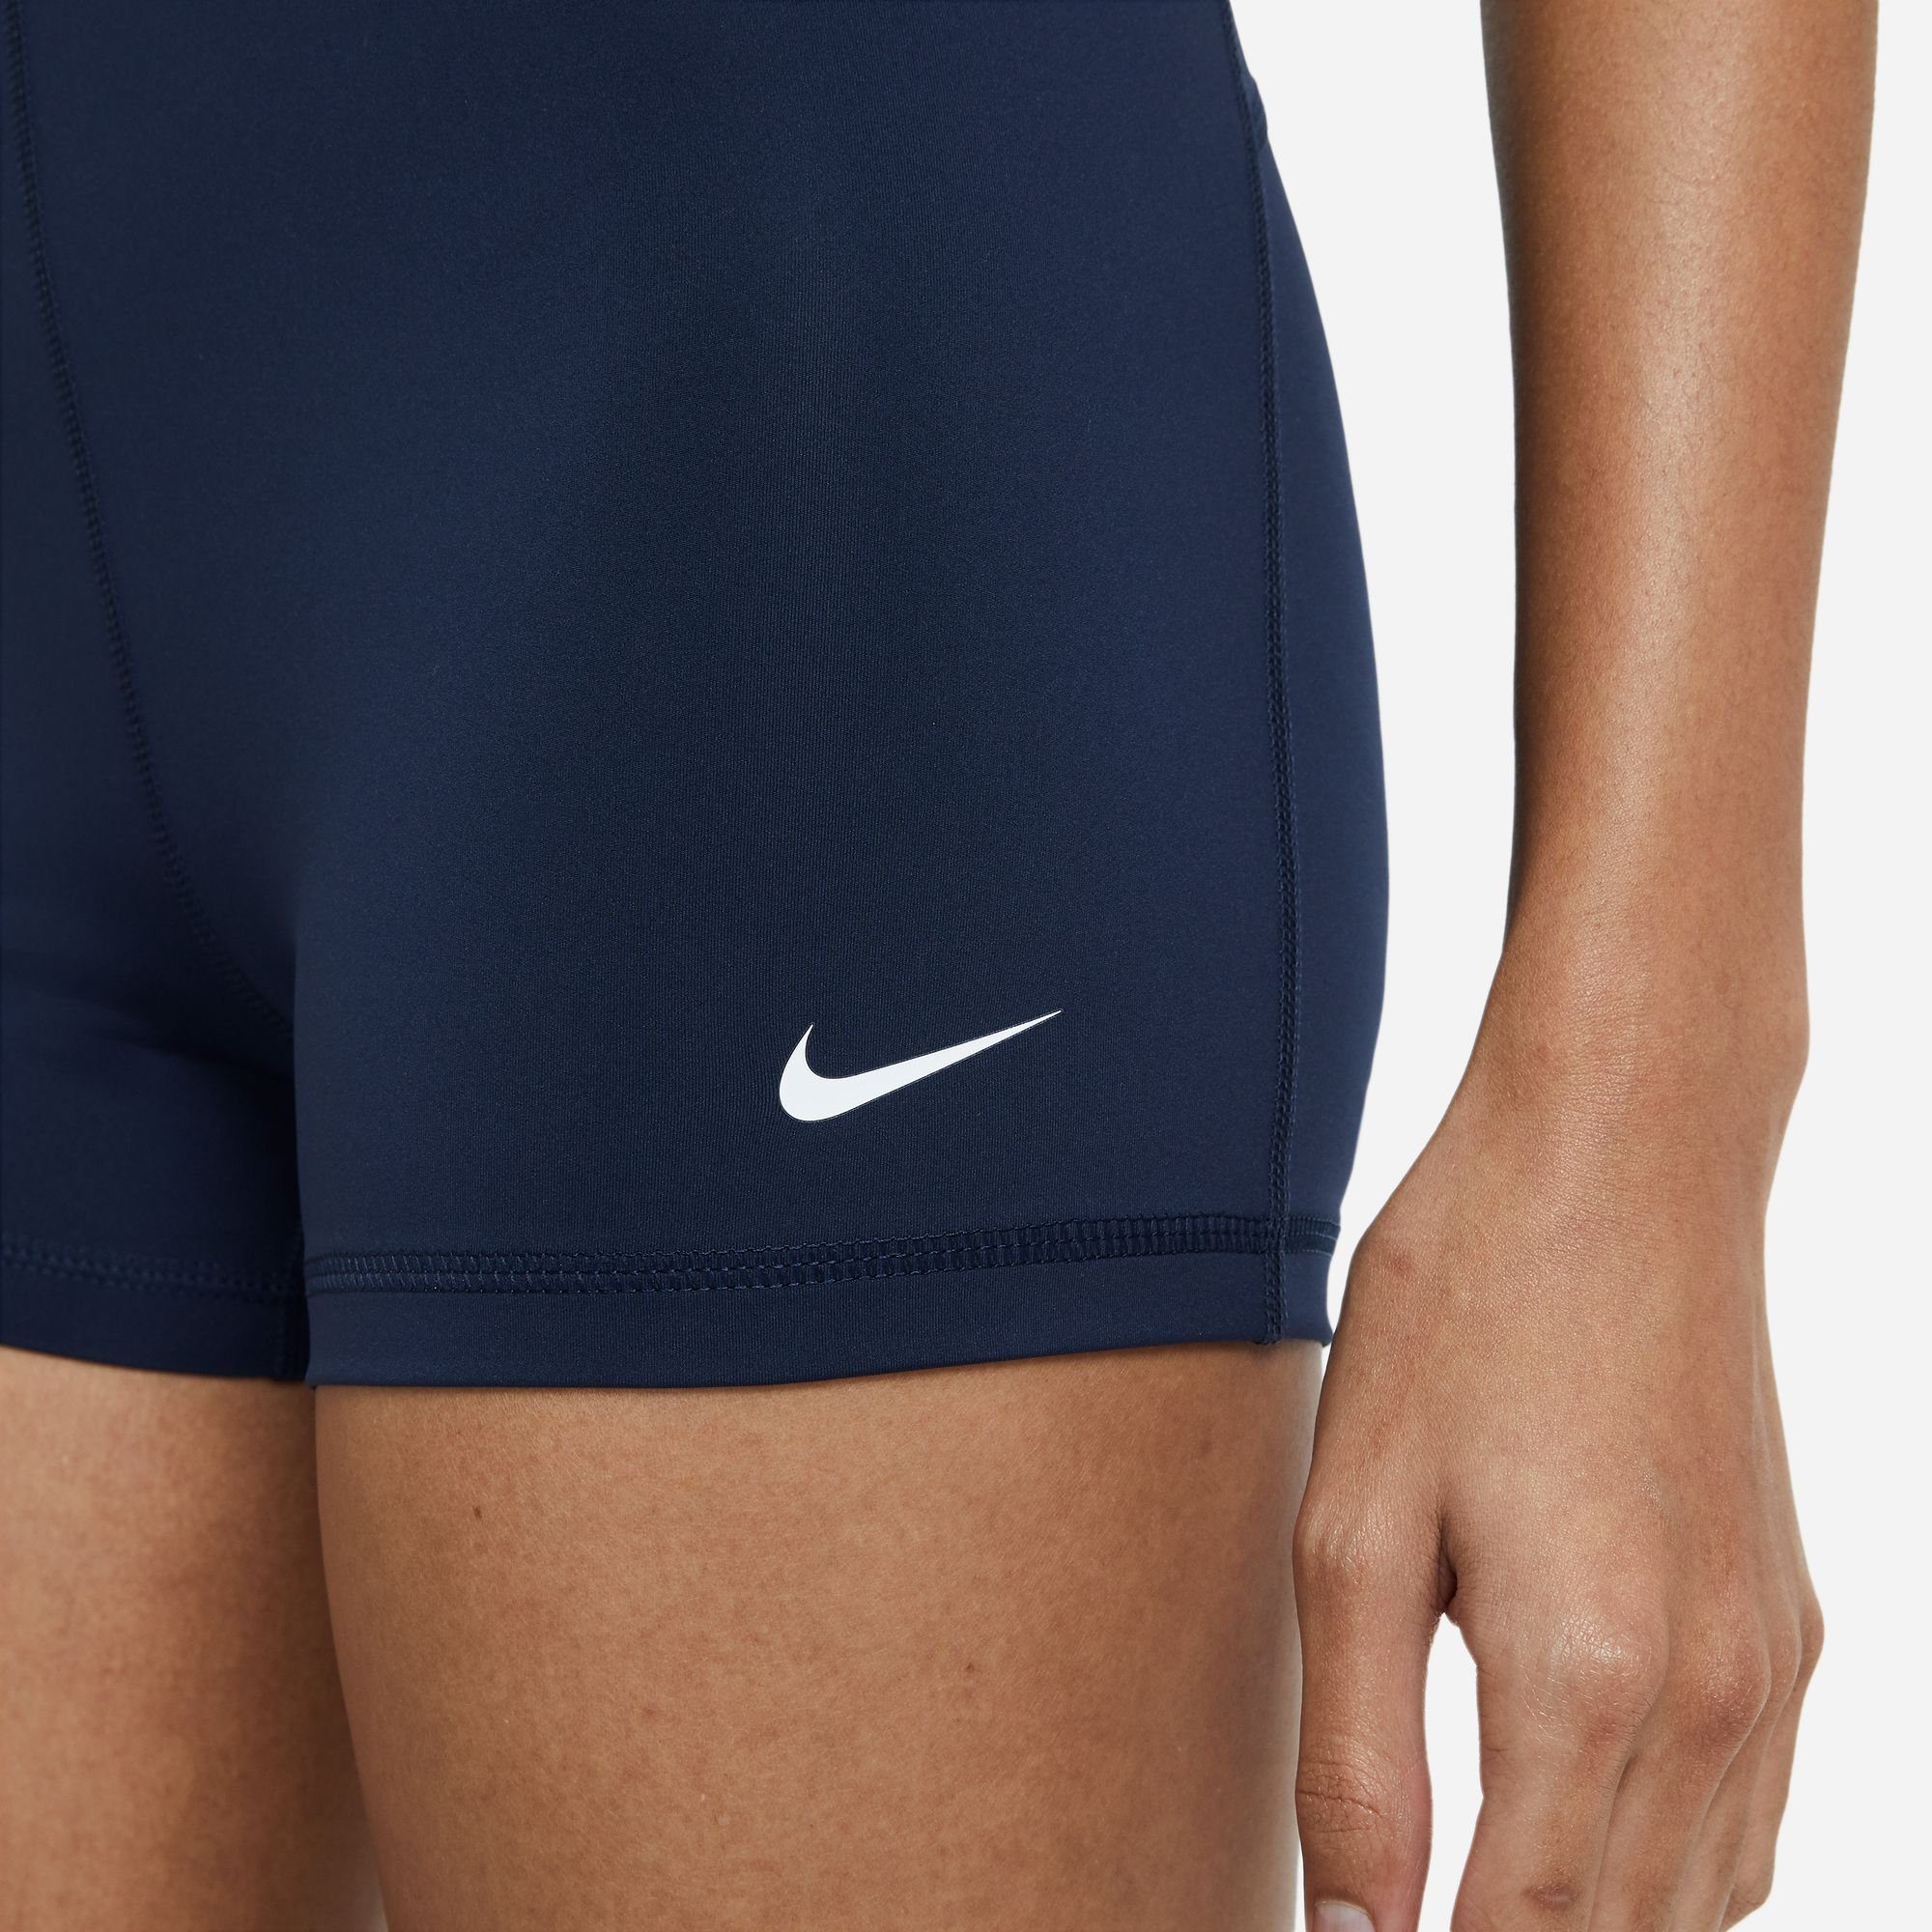 Nike SHORTS OBSIDIAN/WHITE Trainingstights PRO WOMEN'S